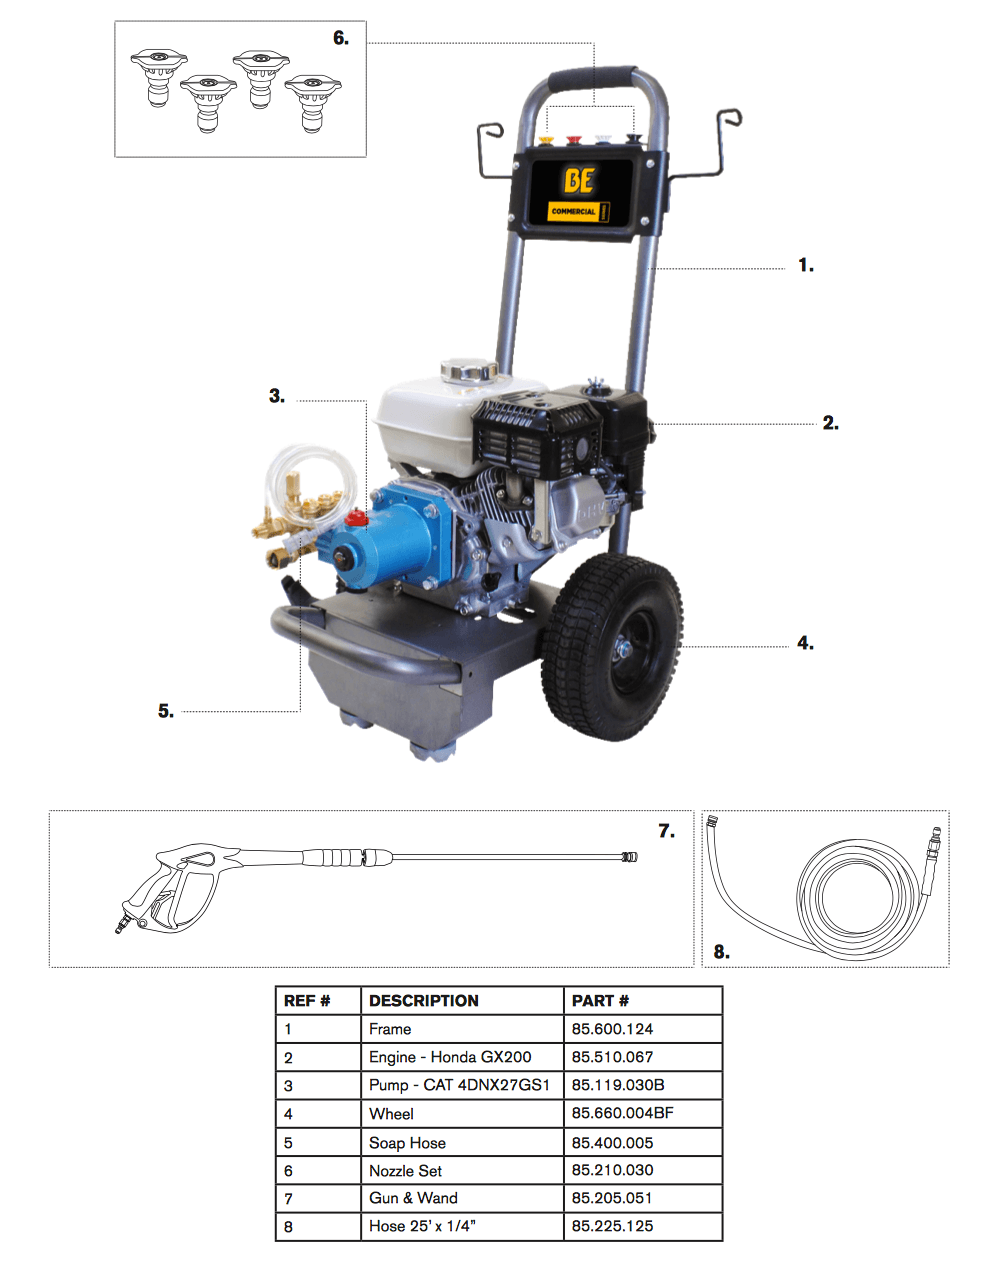 K2400HH Pressure Washer Parts, breakdown, and upgrade pumps